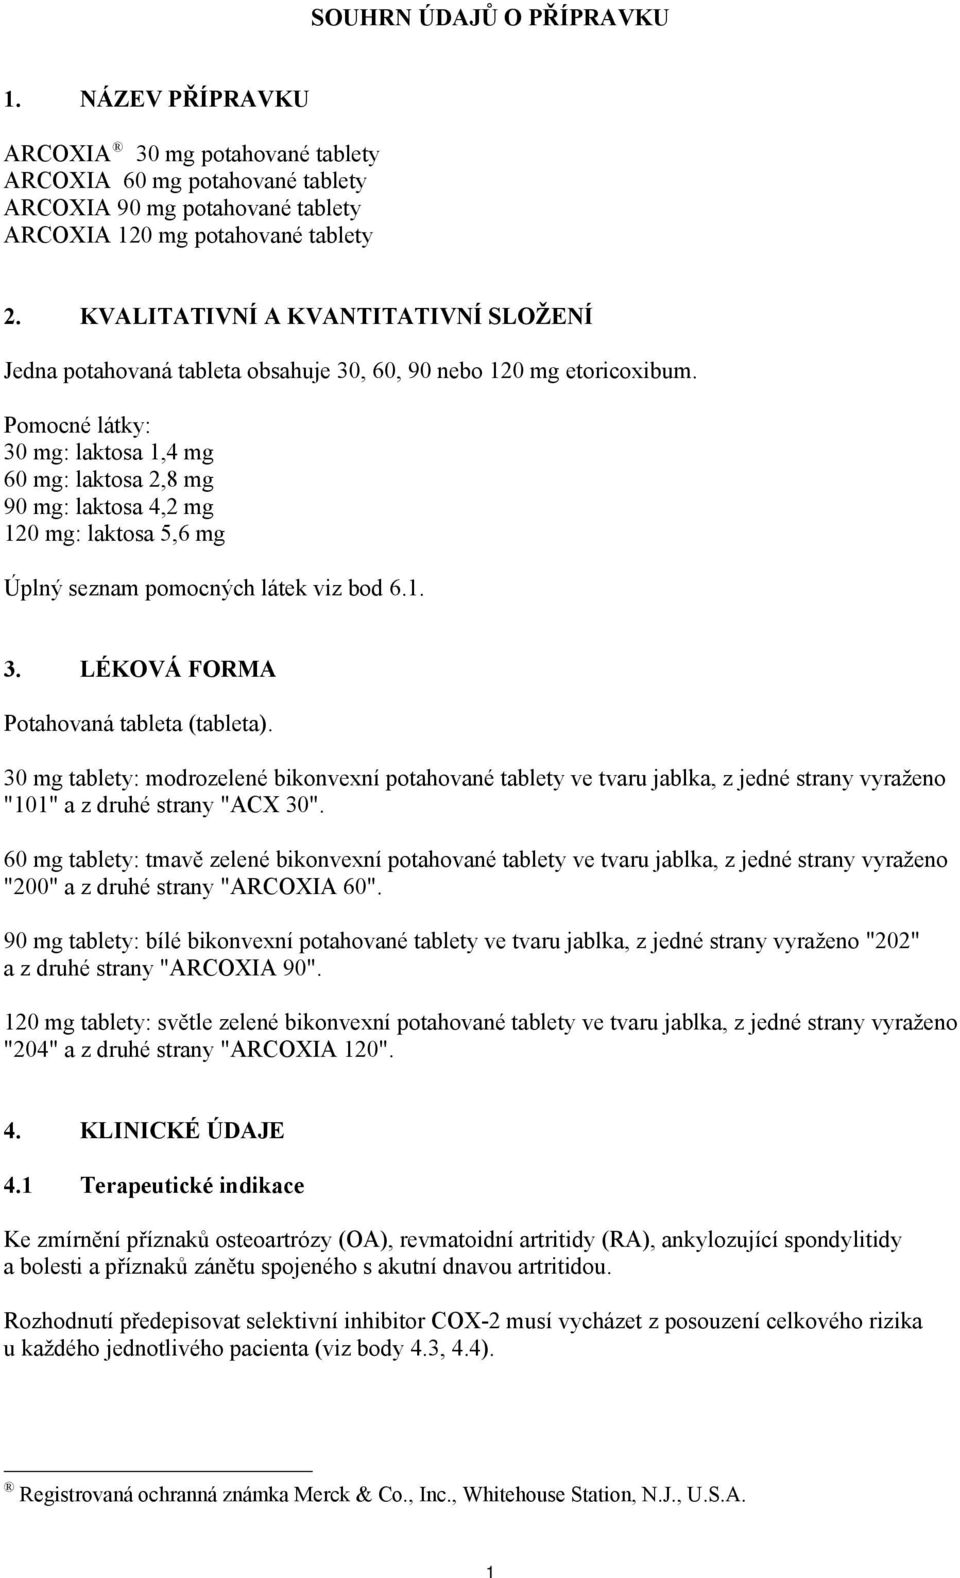 Pomocné látky: 30 mg: laktosa 1,4 mg 60 mg: laktosa 2,8 mg 90 mg: laktosa 4,2 mg 120 mg: laktosa 5,6 mg Úplný seznam pomocných látek viz bod 6.1. 3. LÉKOVÁ FORMA Potahovaná tableta (tableta).